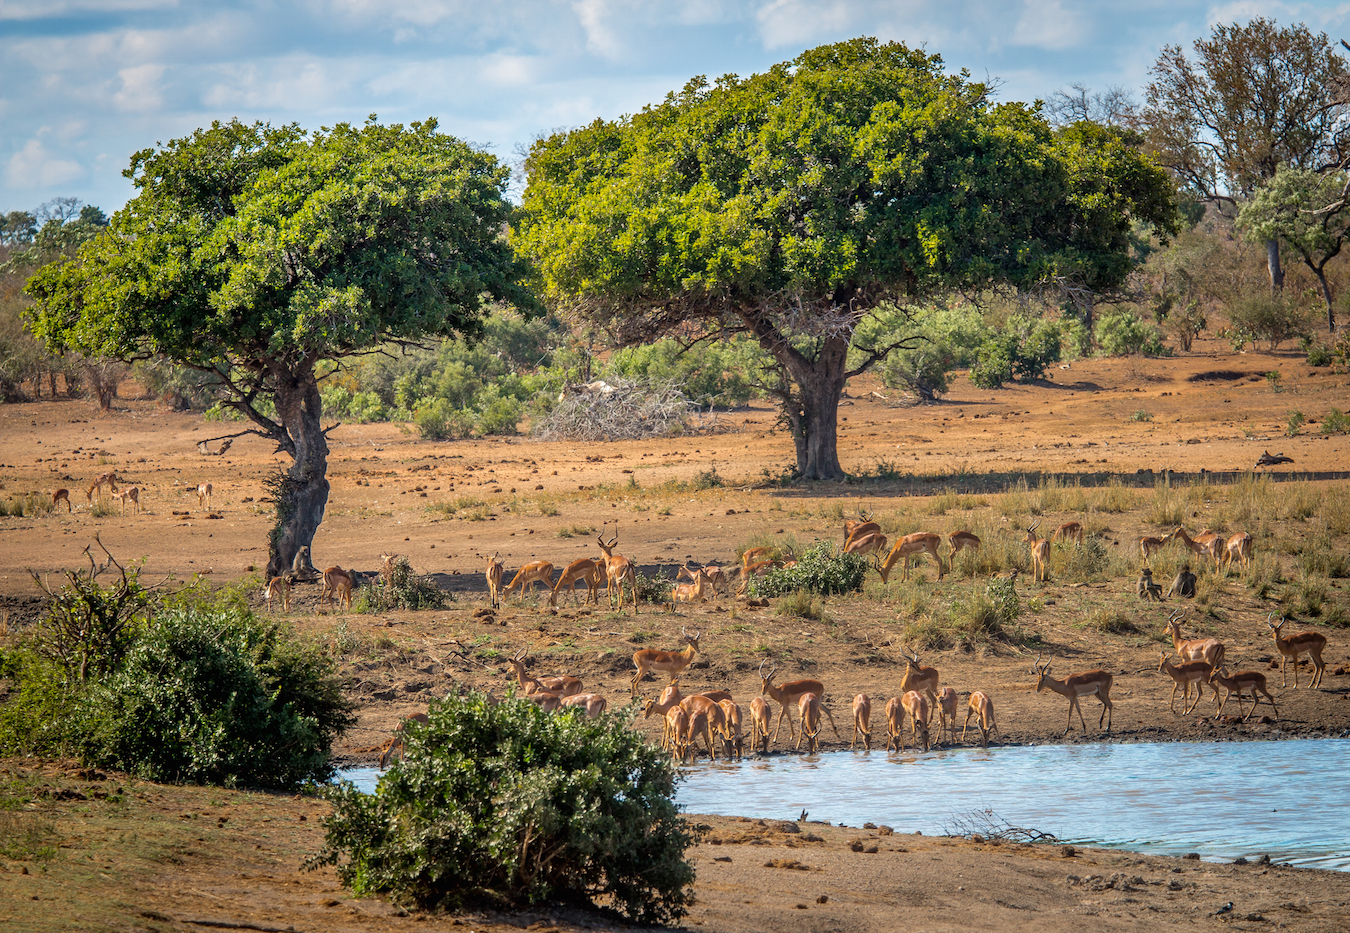 Kruger National Park, home to the world’s big five